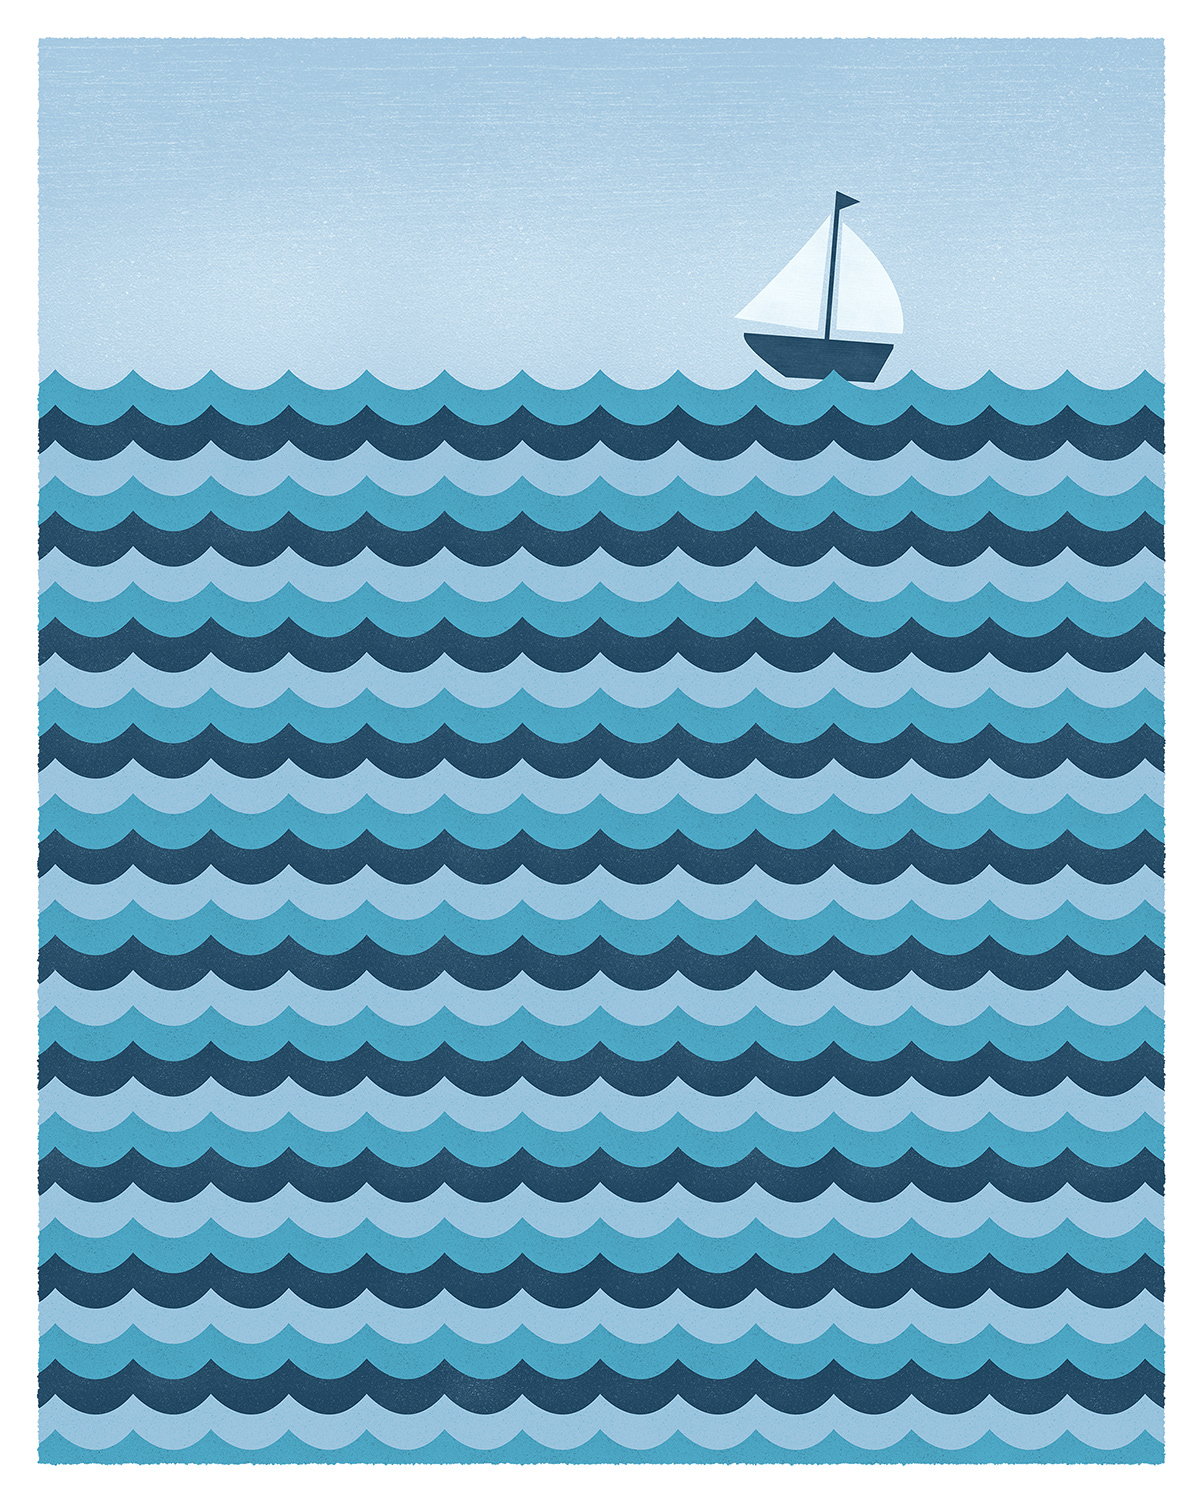 Sail Ocean waves minimal color